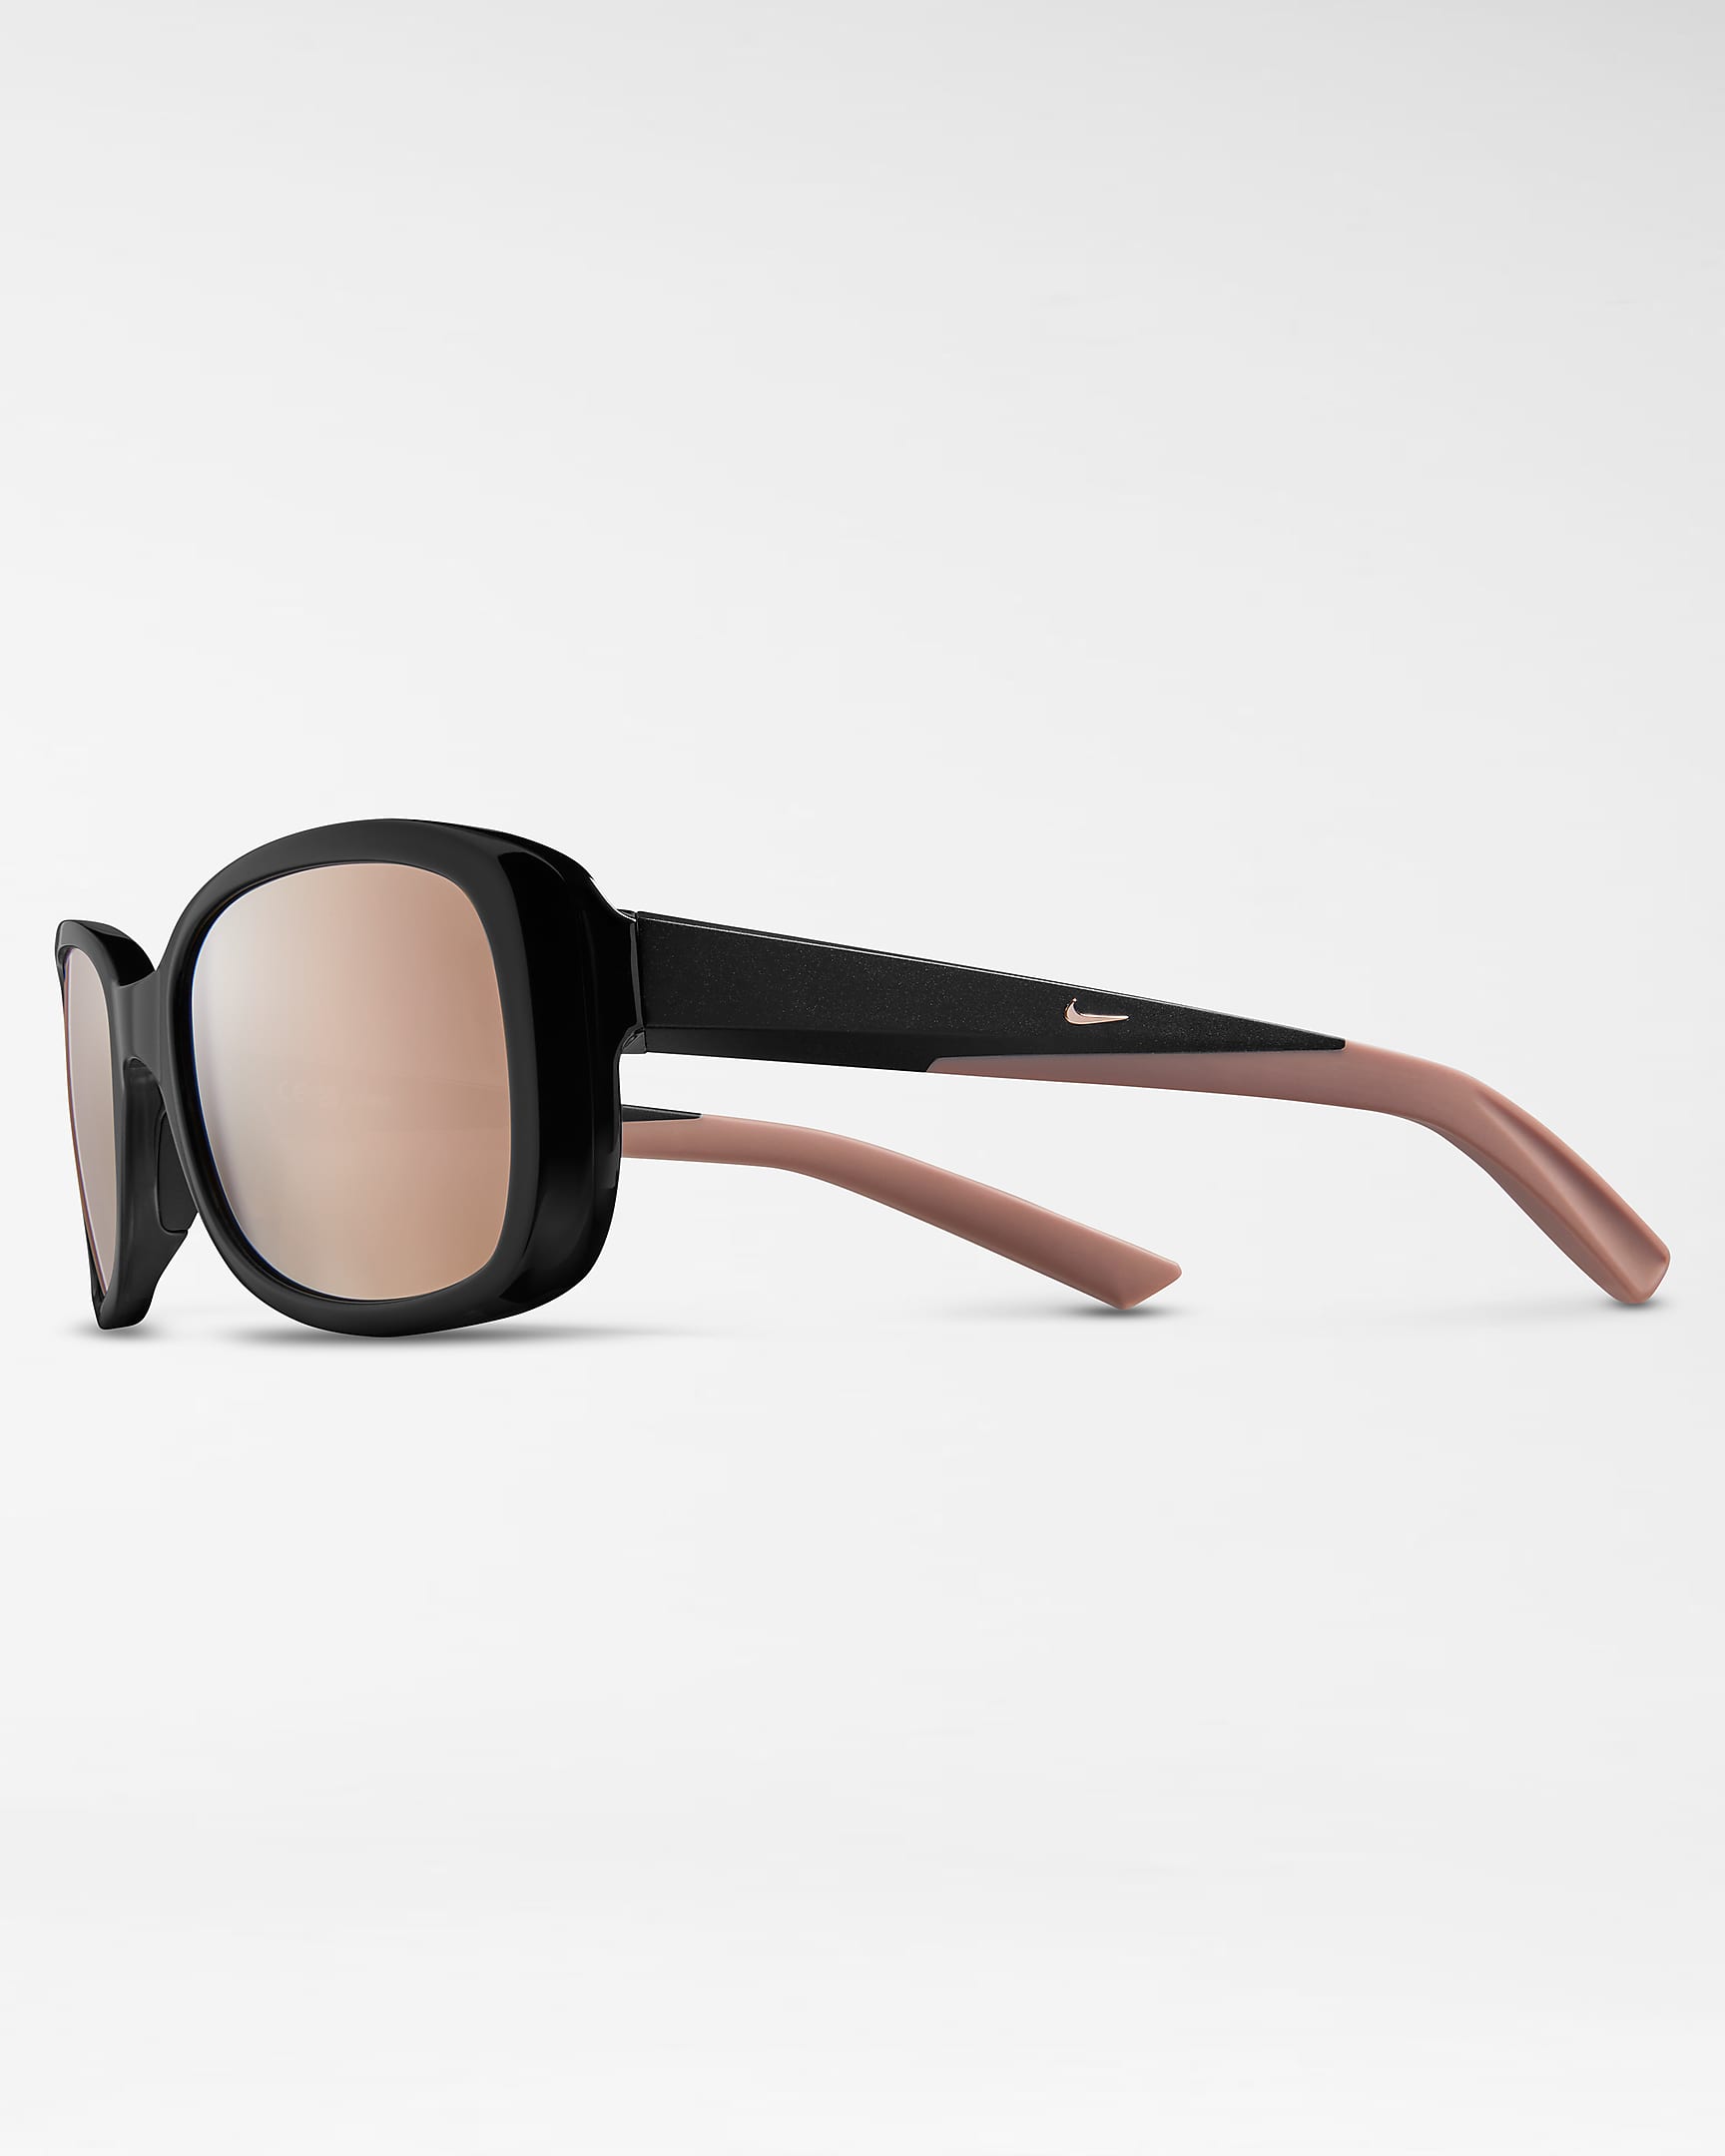 Nike Epic Breeze Mirrored Sunglasses - Black/Rose Gold